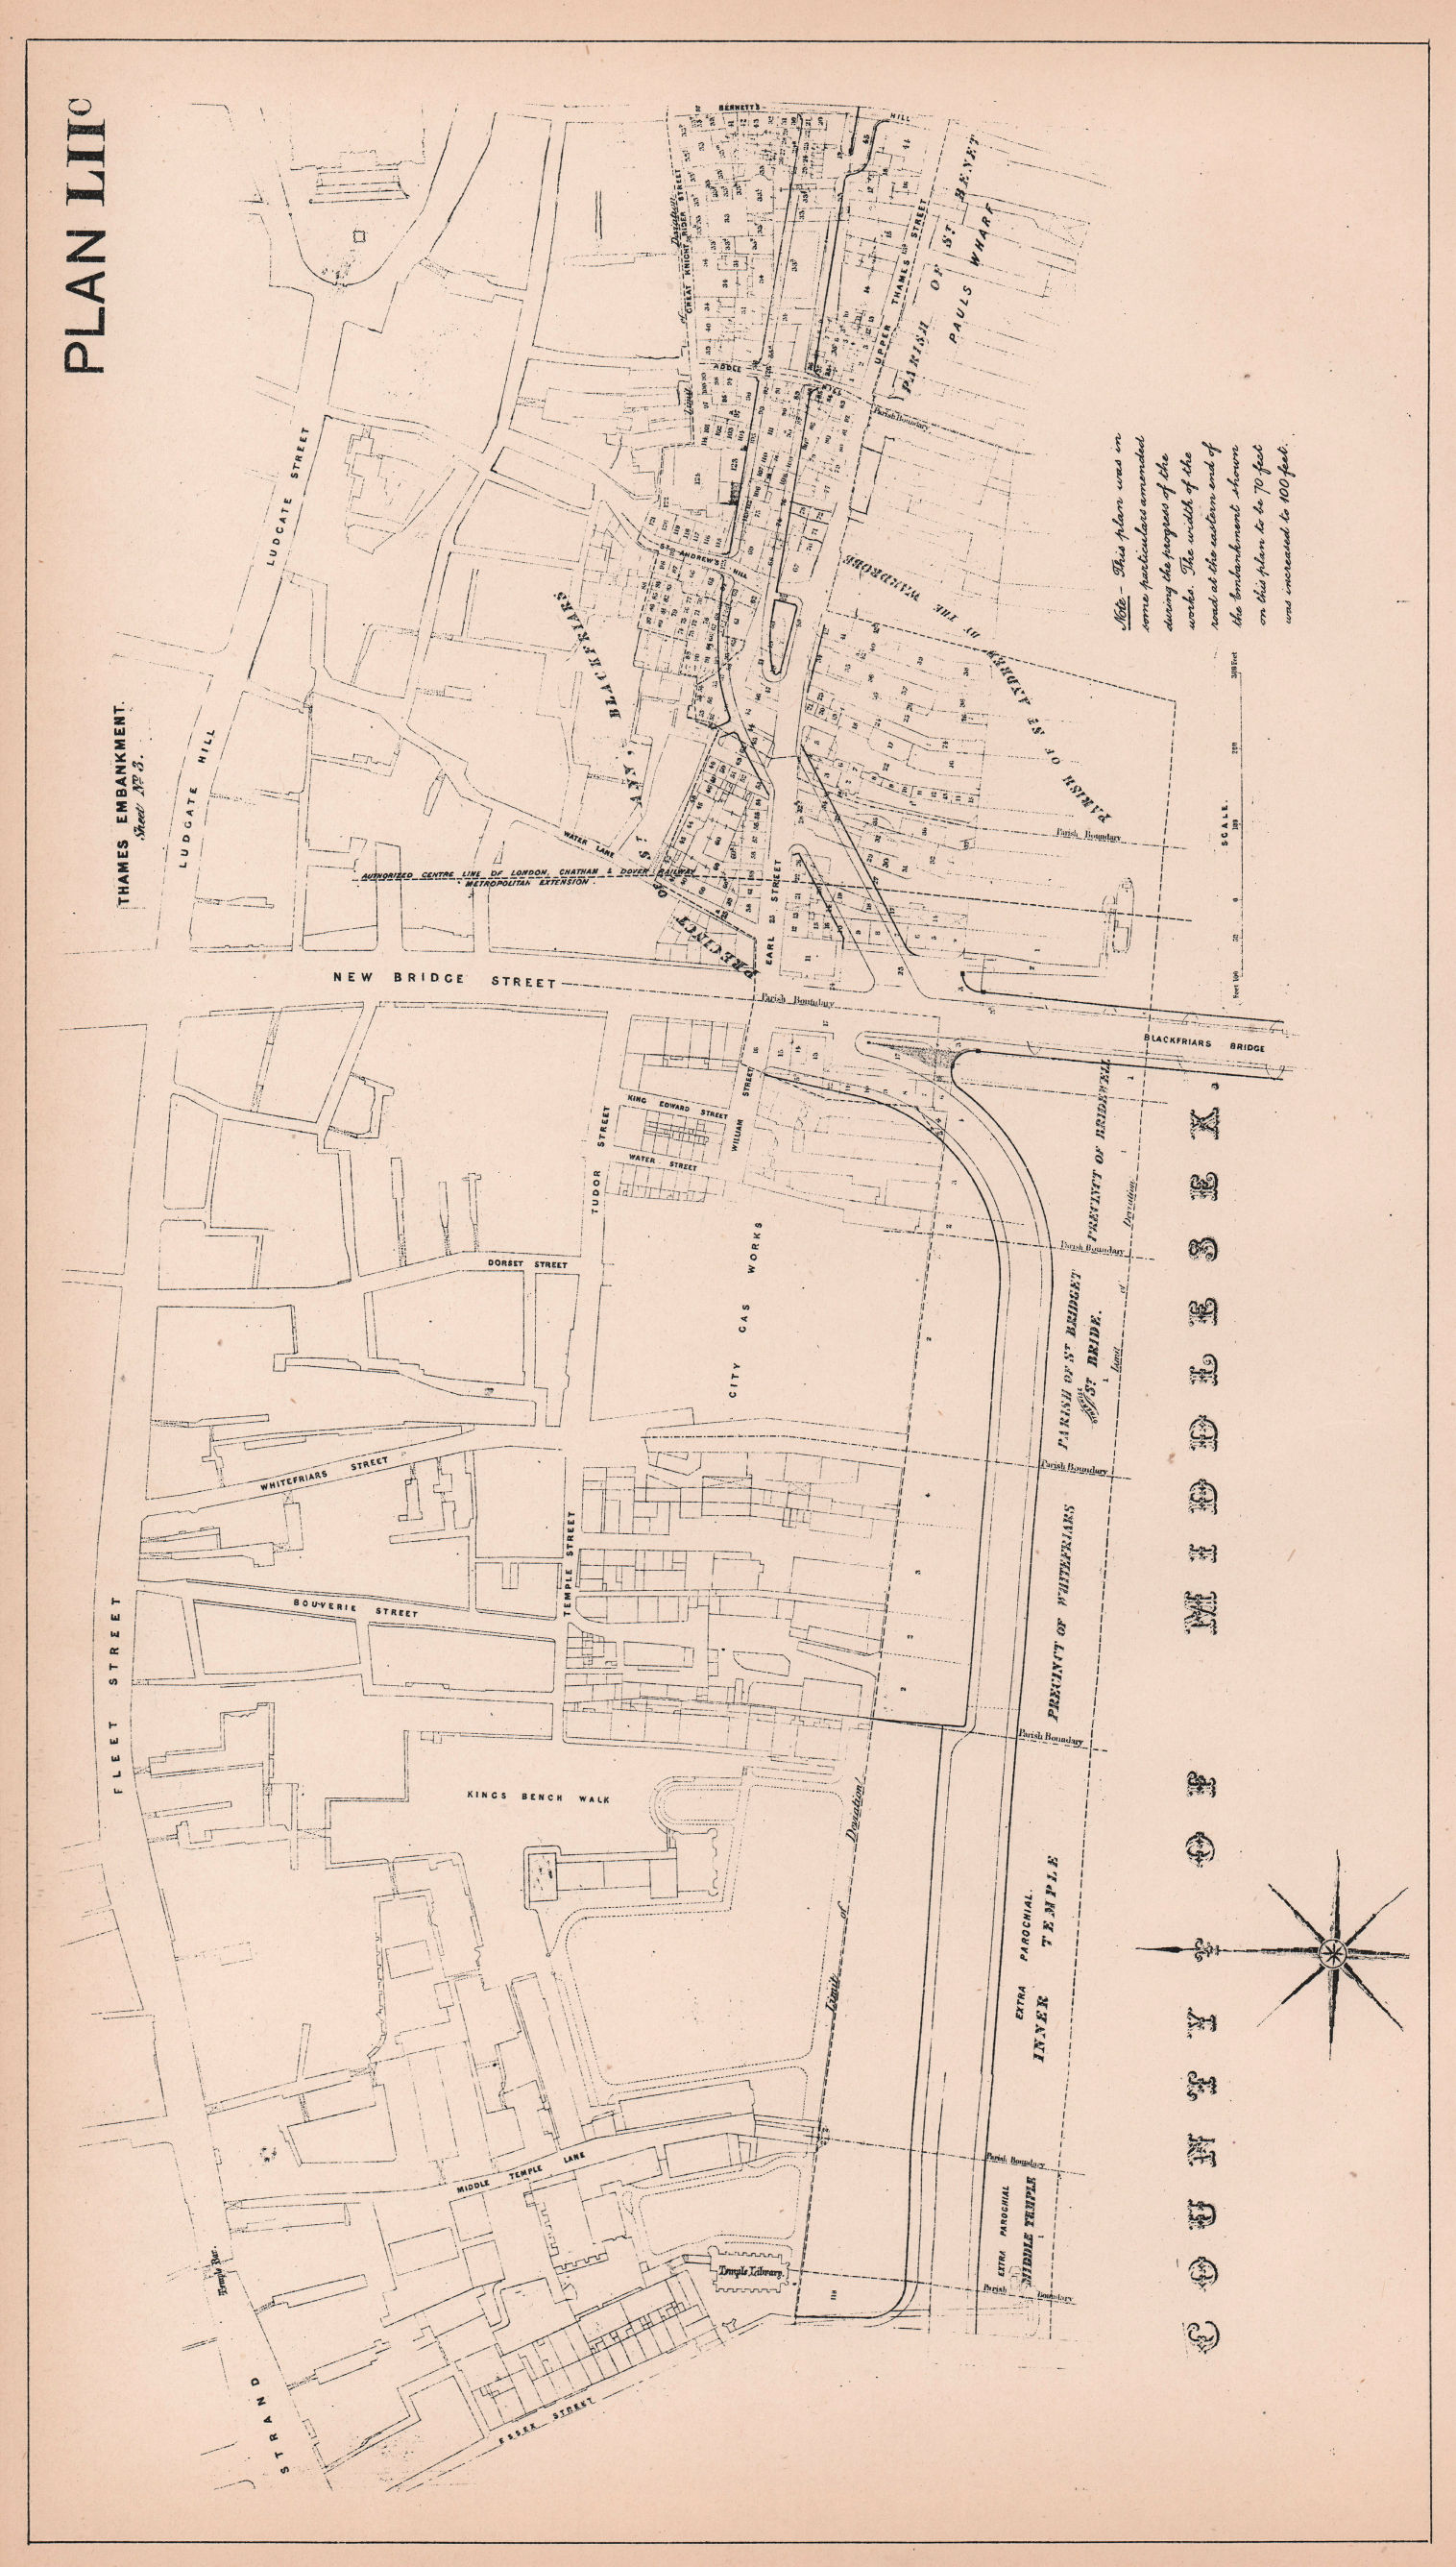 1877 Victoria Embankment plan. Middle Temple-Blackfriars. Fleet Street 1898 map